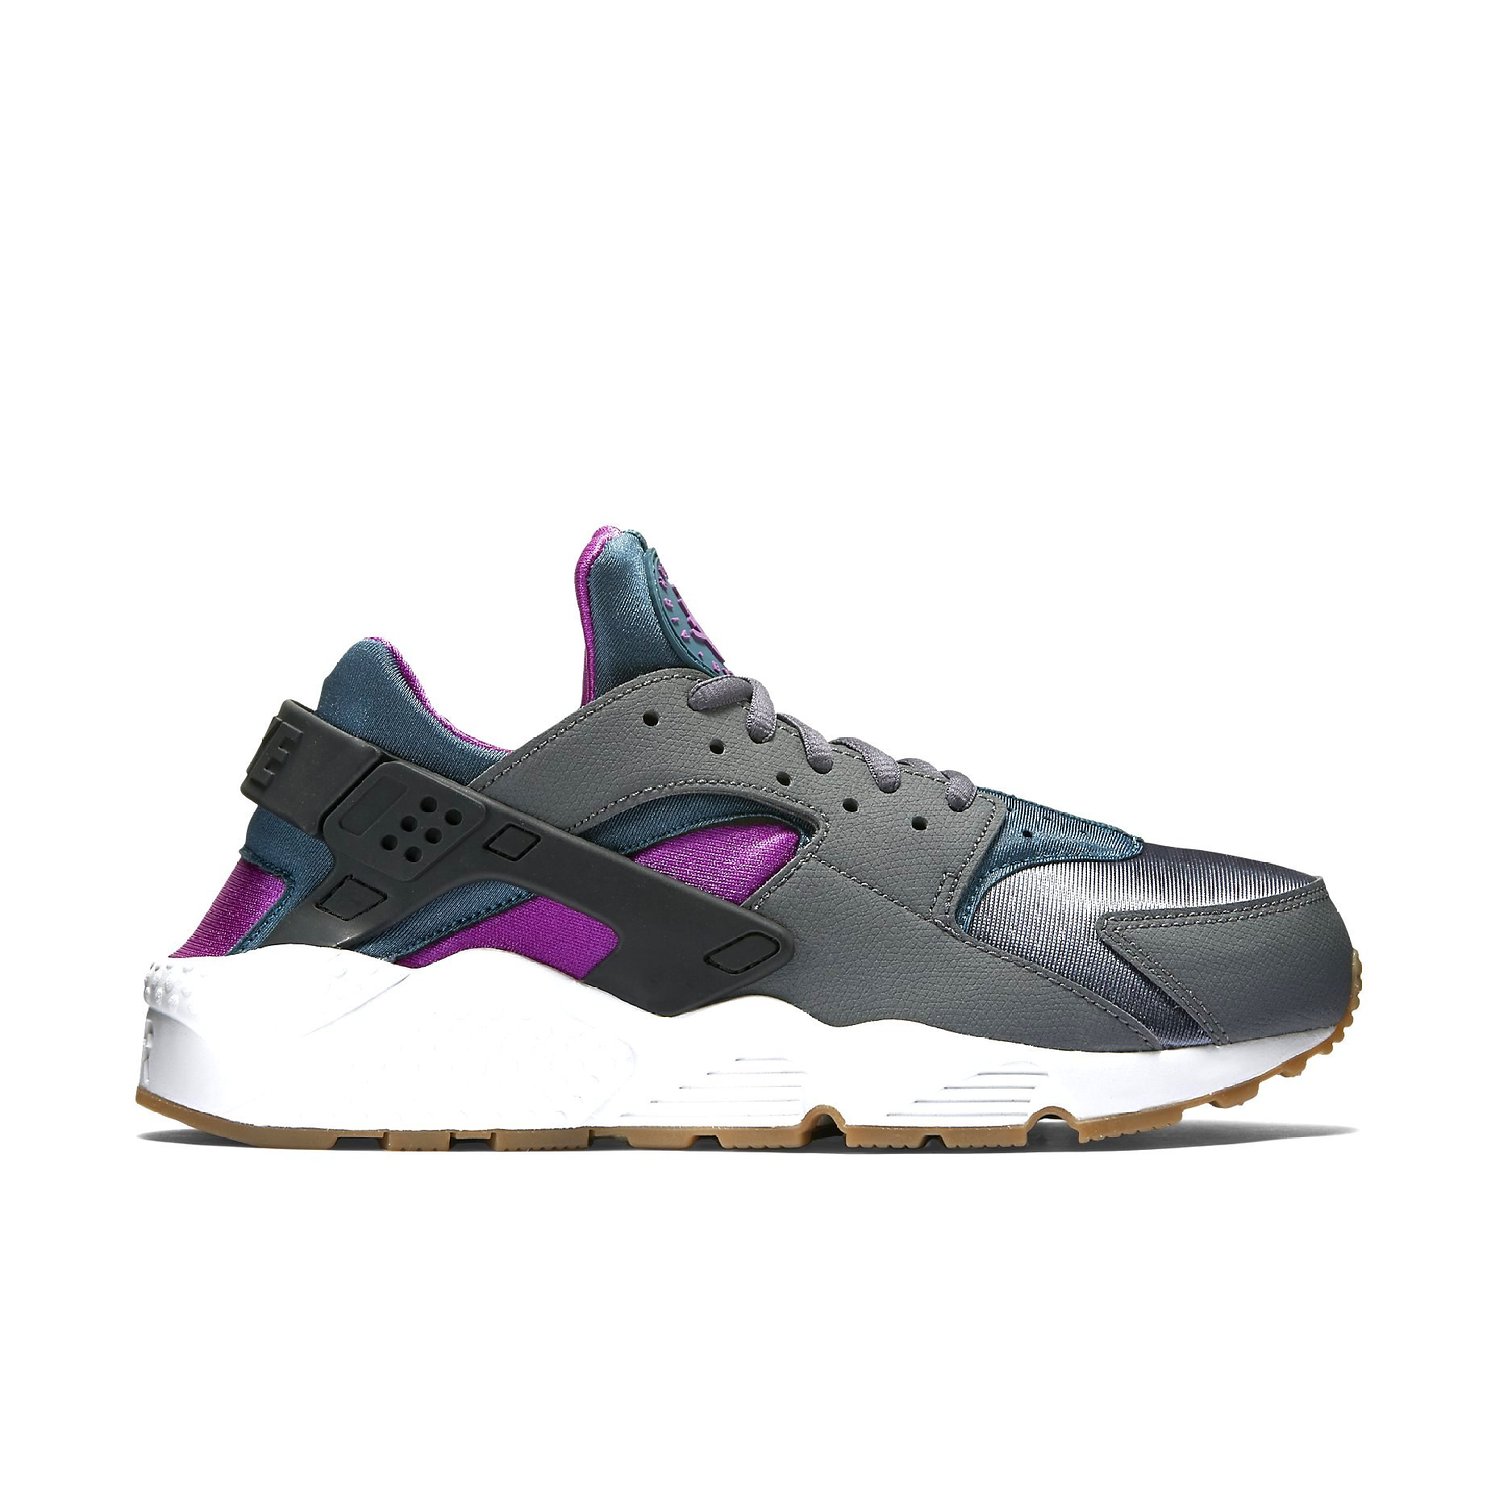 Nike Women's Air Huarache Run Running Shoe-Dark Grey/Teal/Violet - image 1 of 5